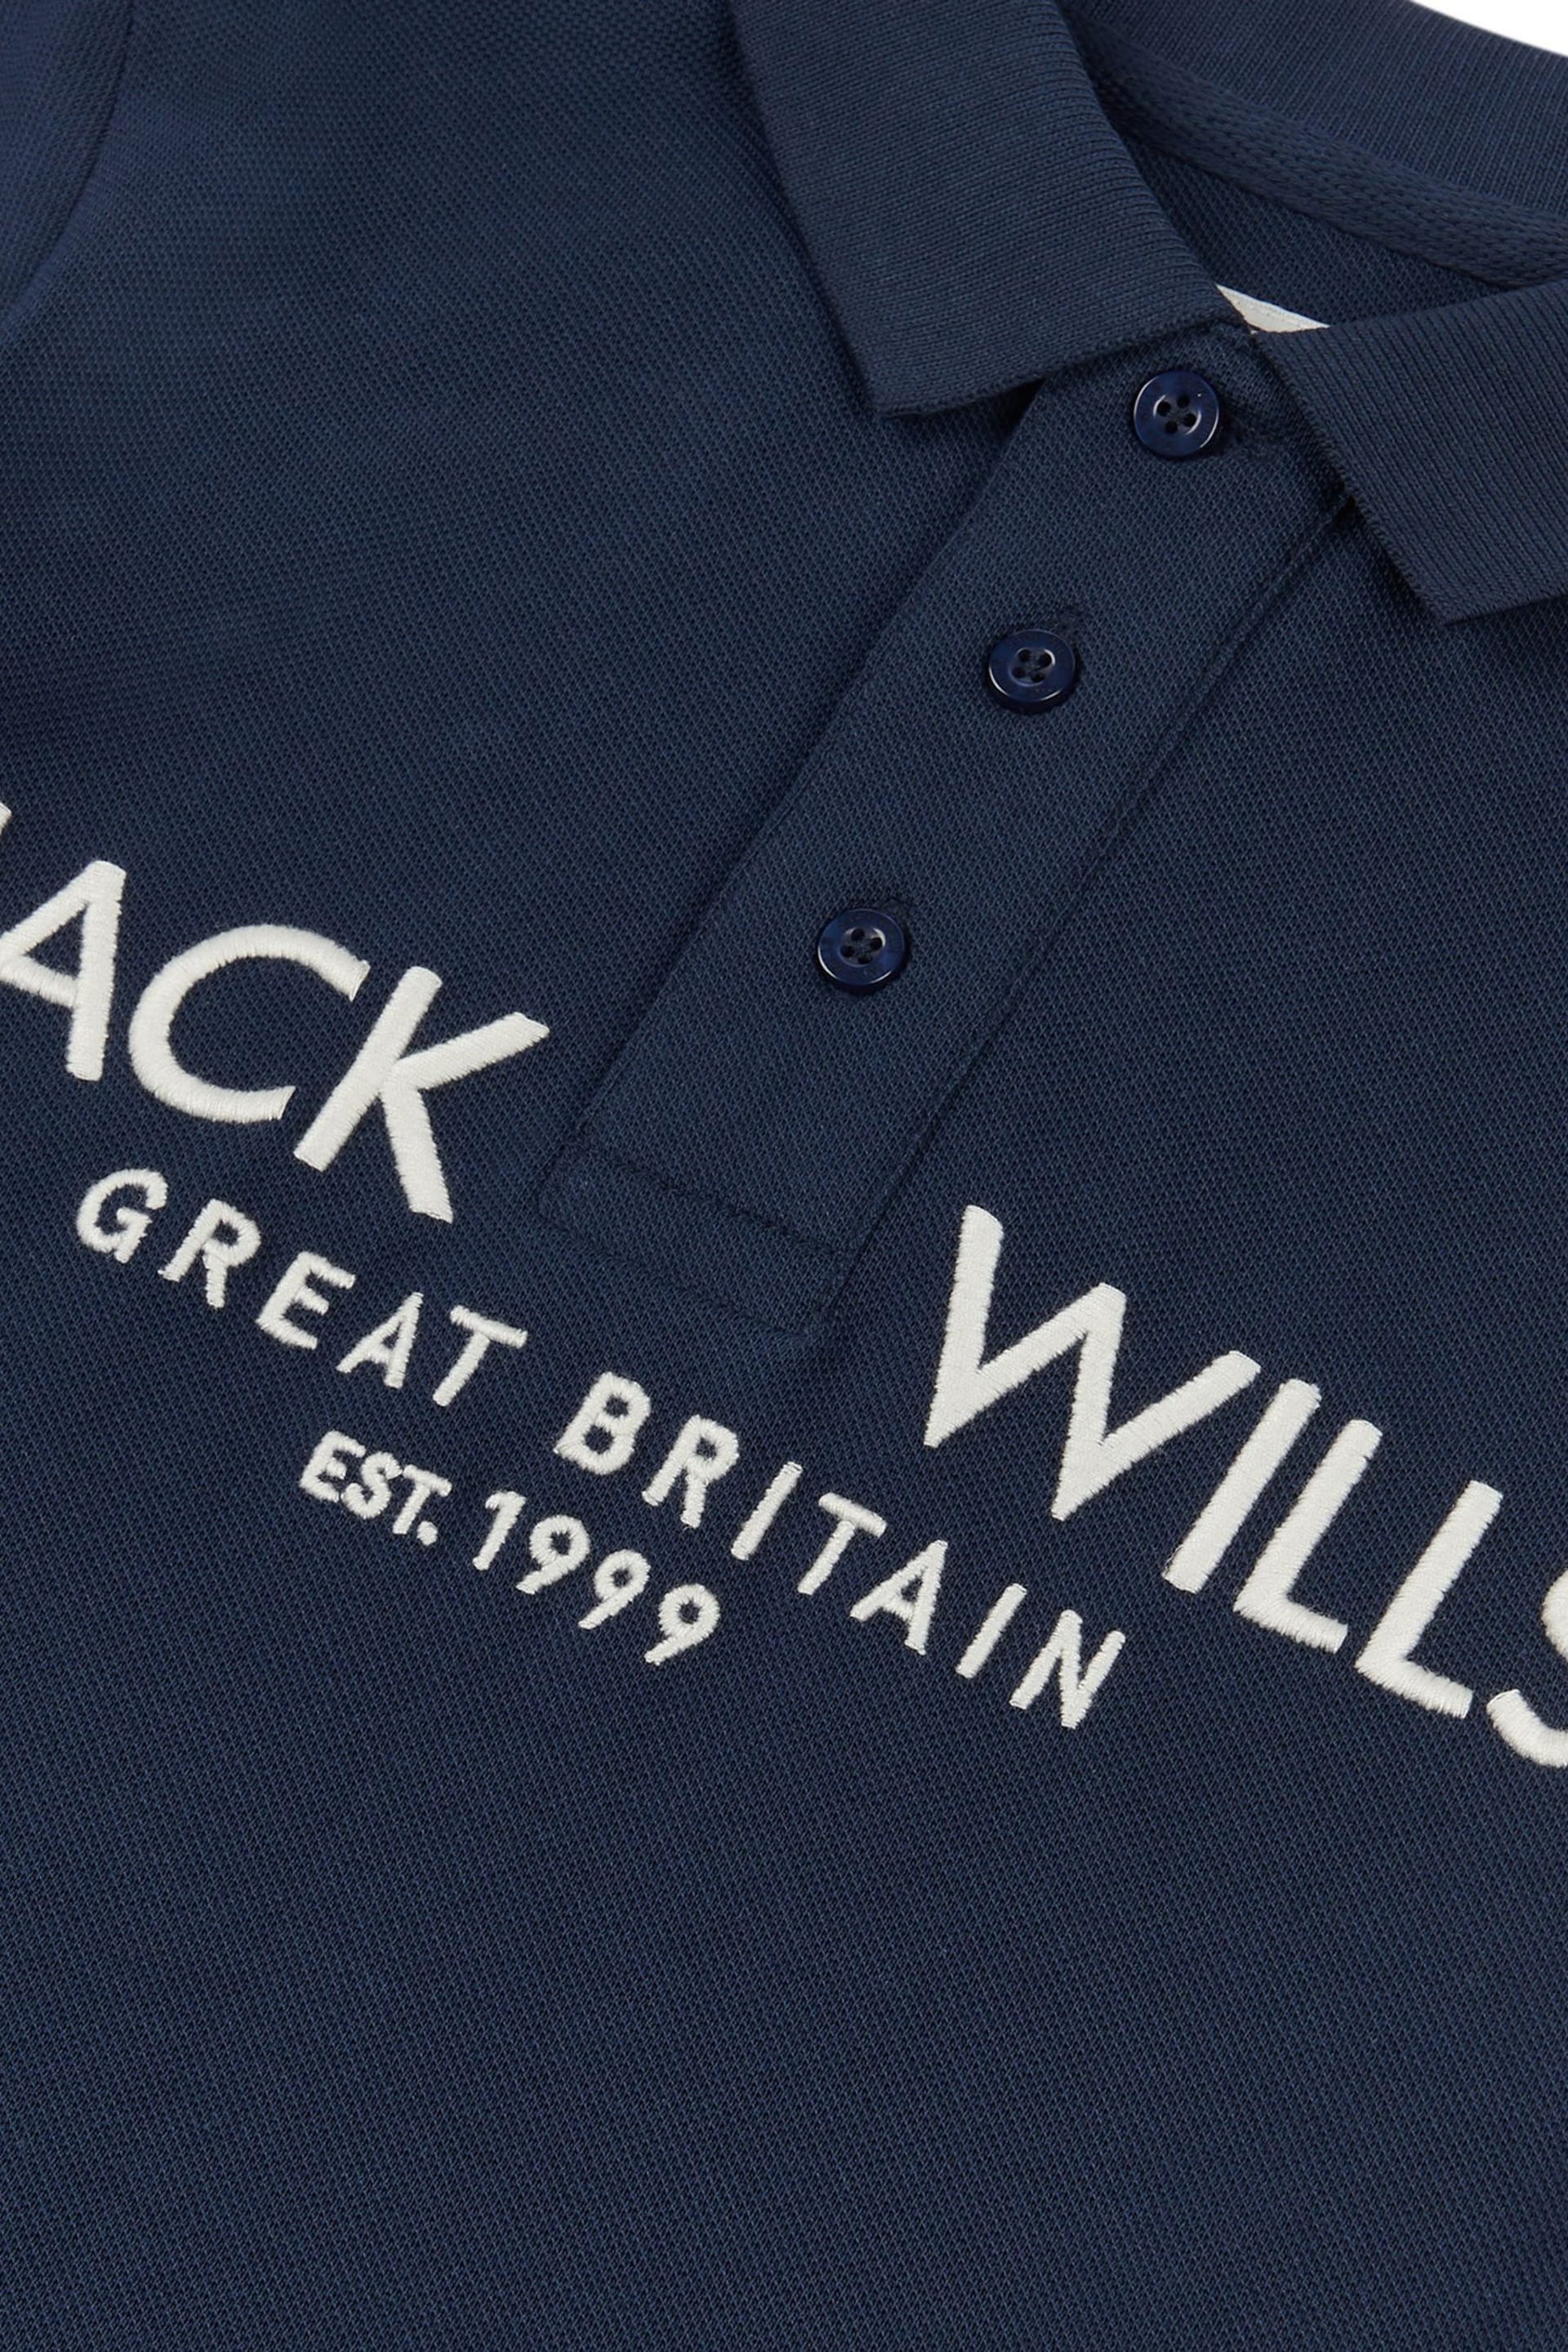 Jack Wills Boys Pique Polo Shirt - Image 7 of 7